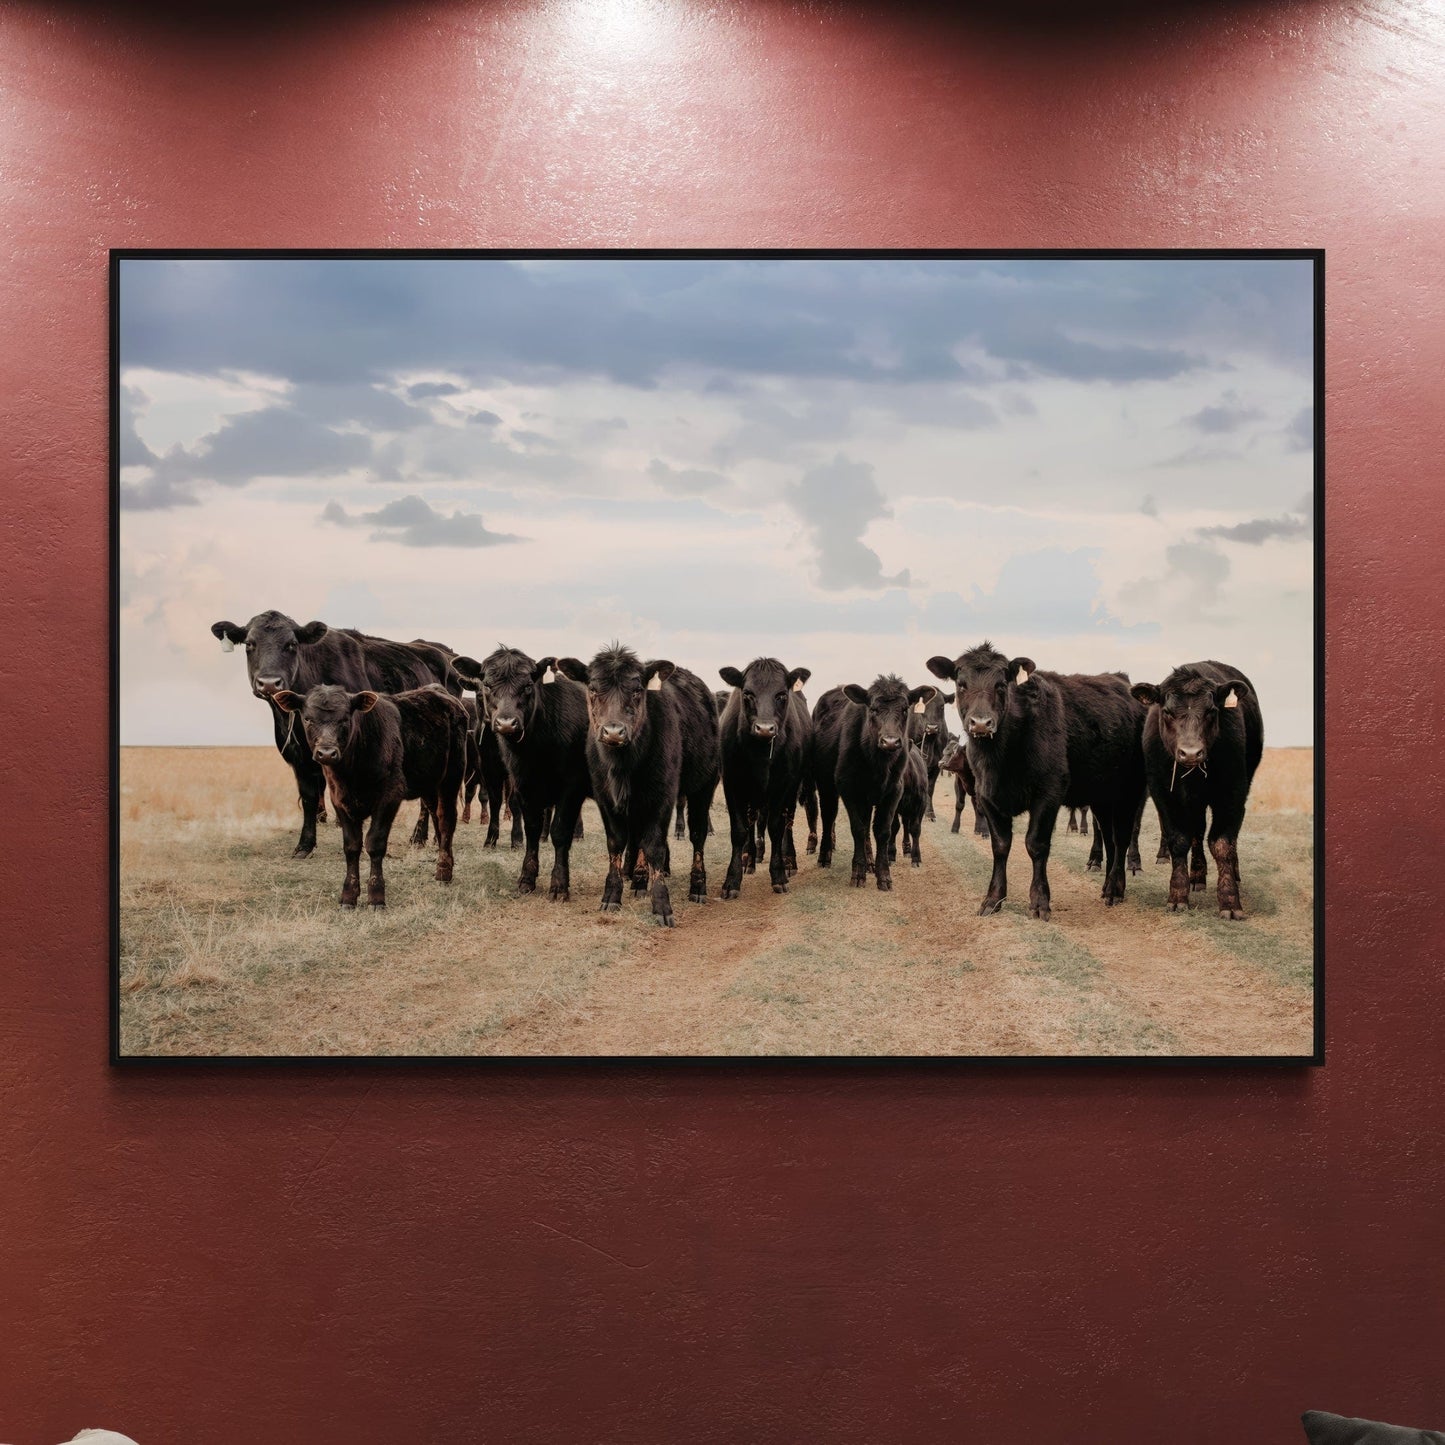 Black Angus Cattle Decor - Blue Oklahoma Sky Wall Art Teri James Photography